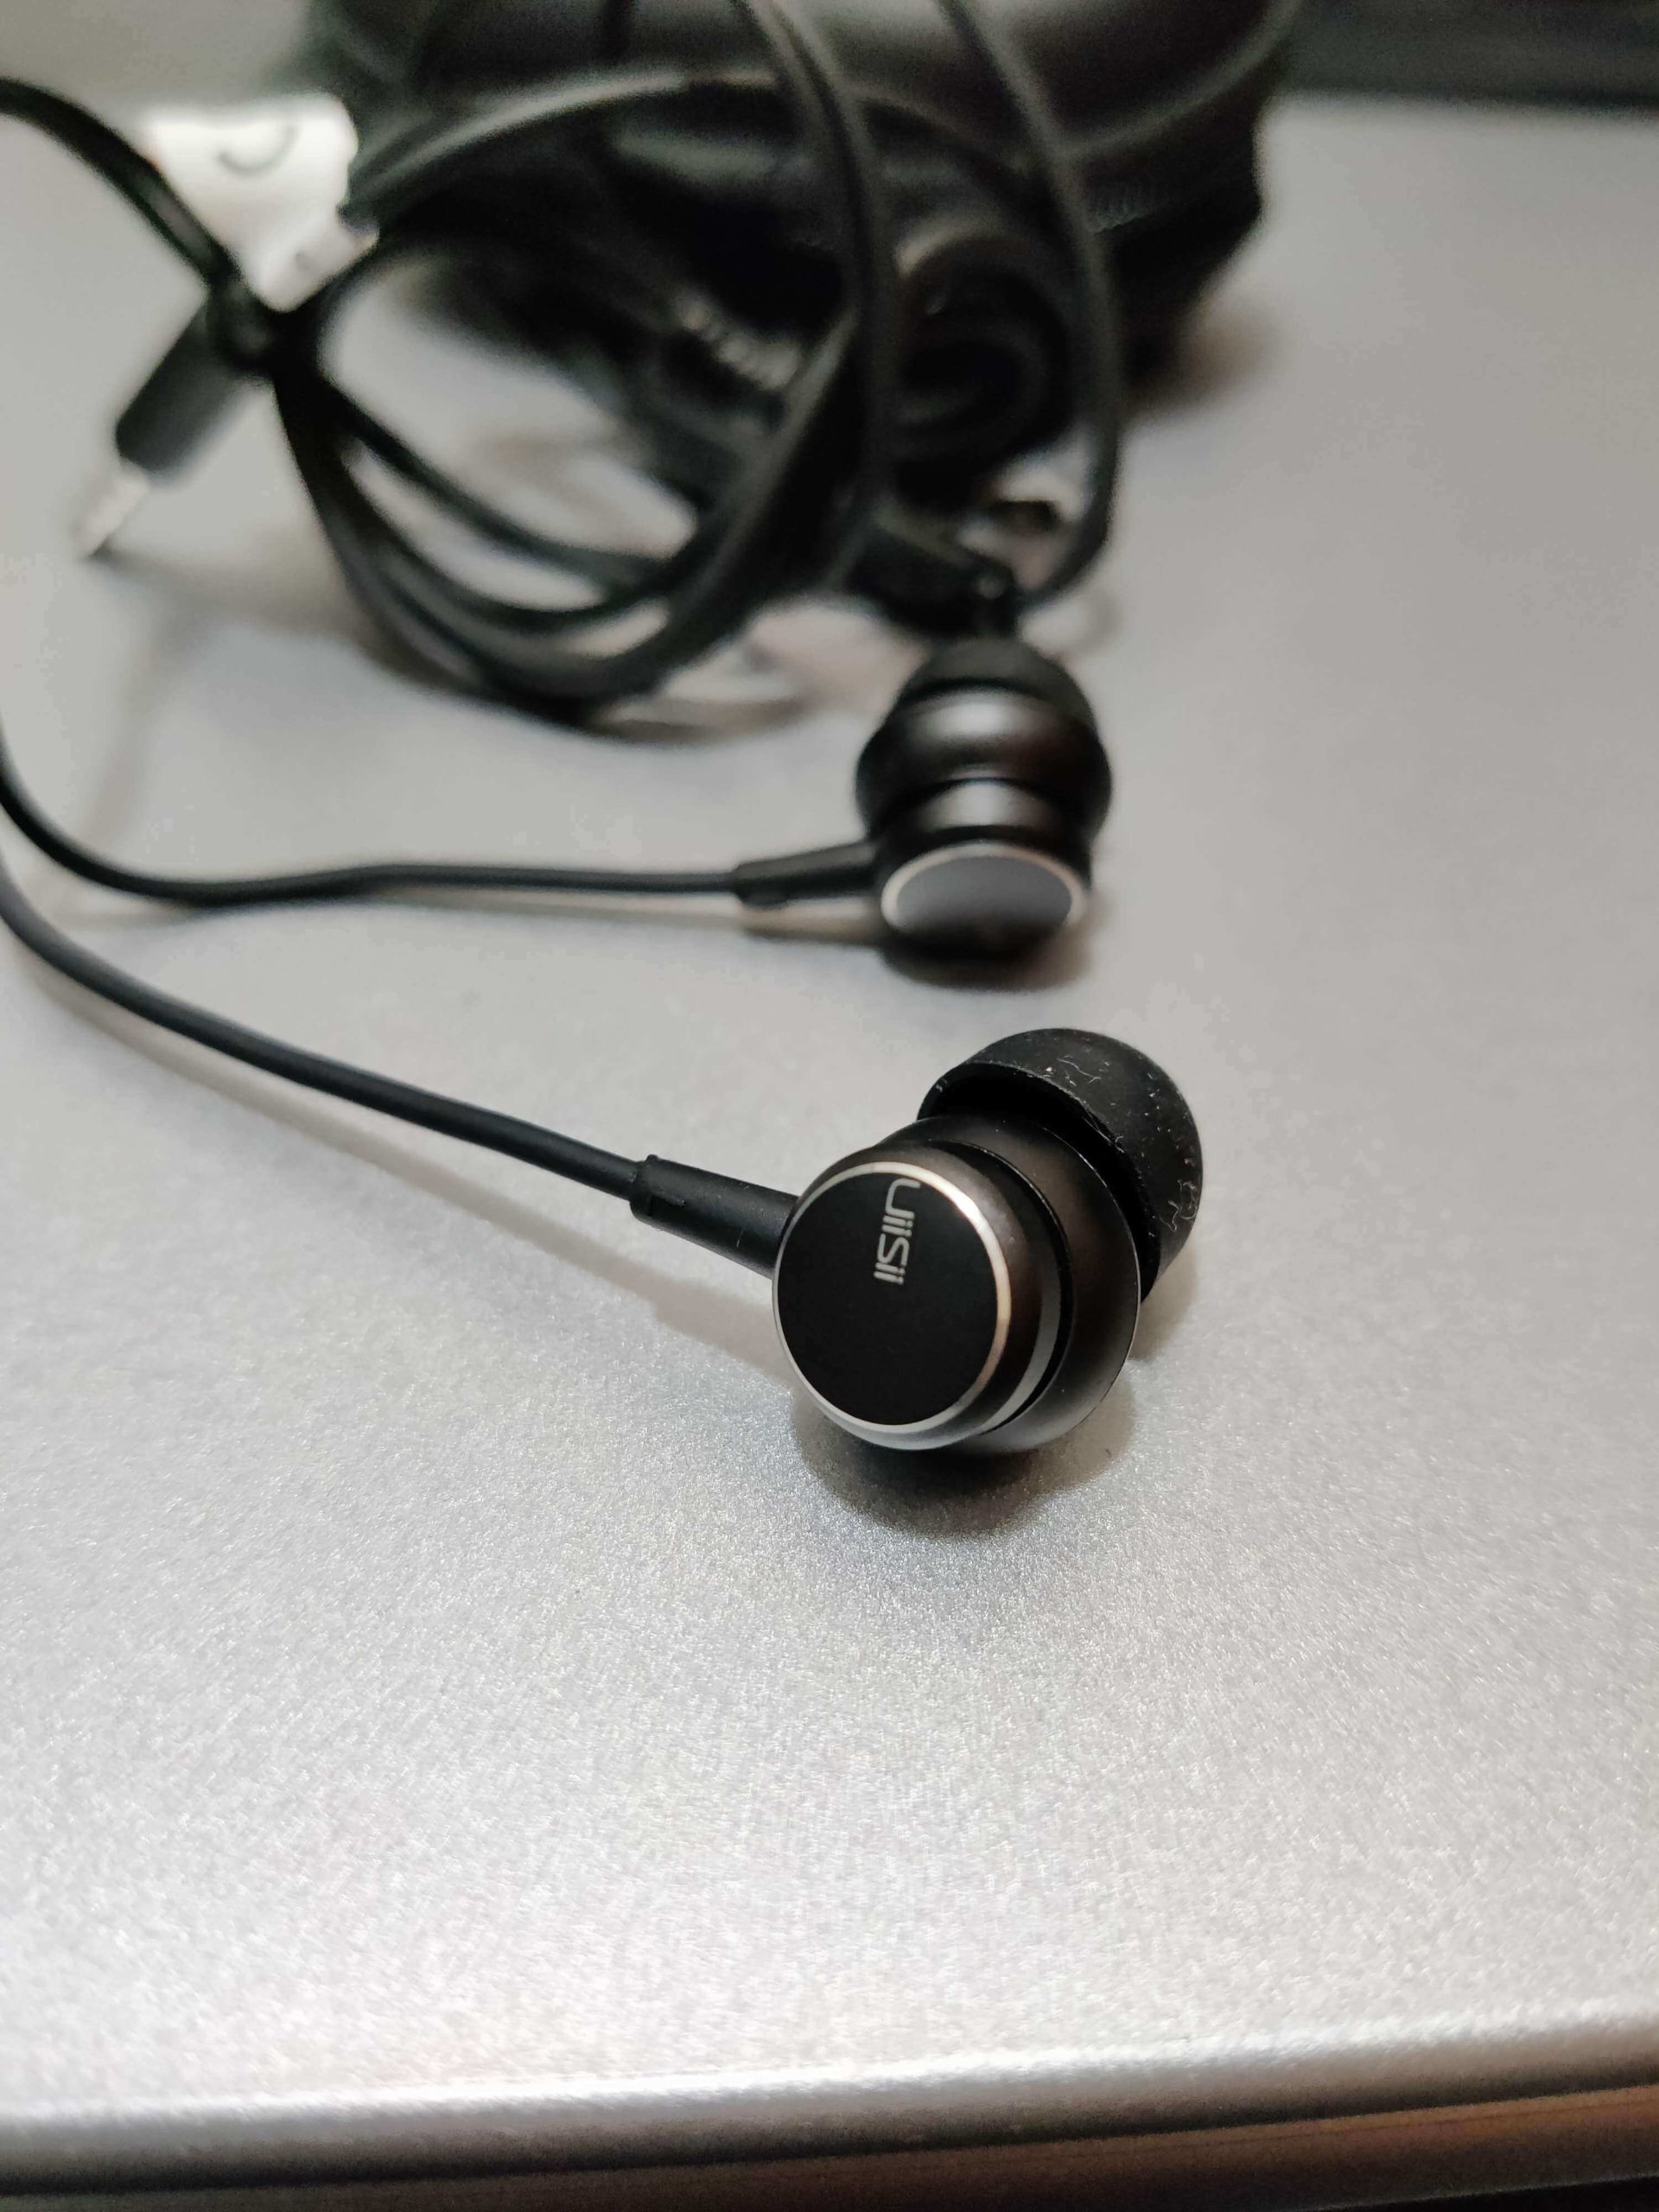 Original UIISII HM9 pro In-Ear Deep Earphones with pouch - black